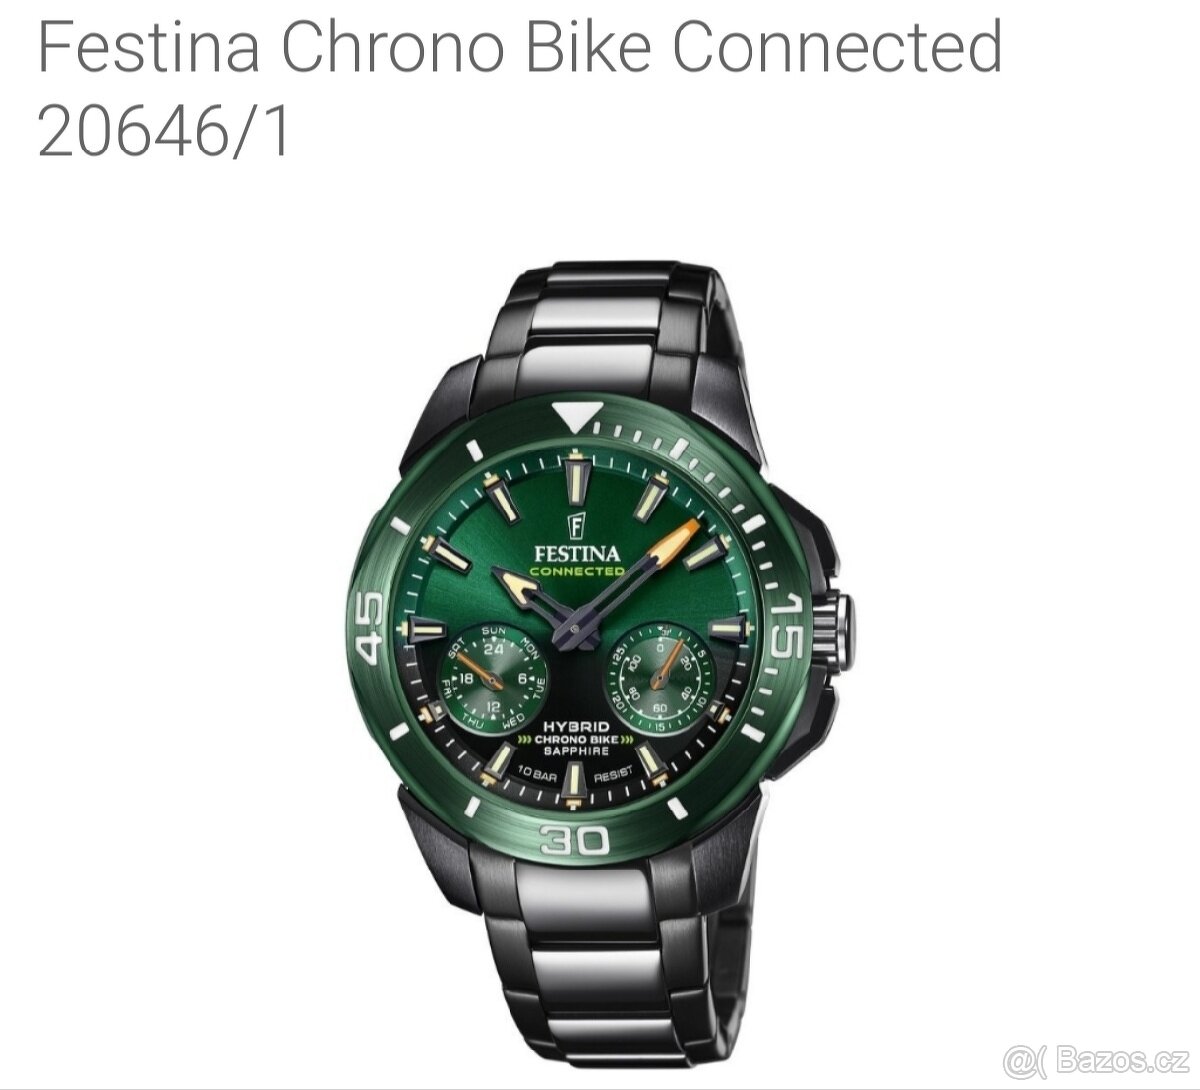 Festina Chrono Bike Connected

